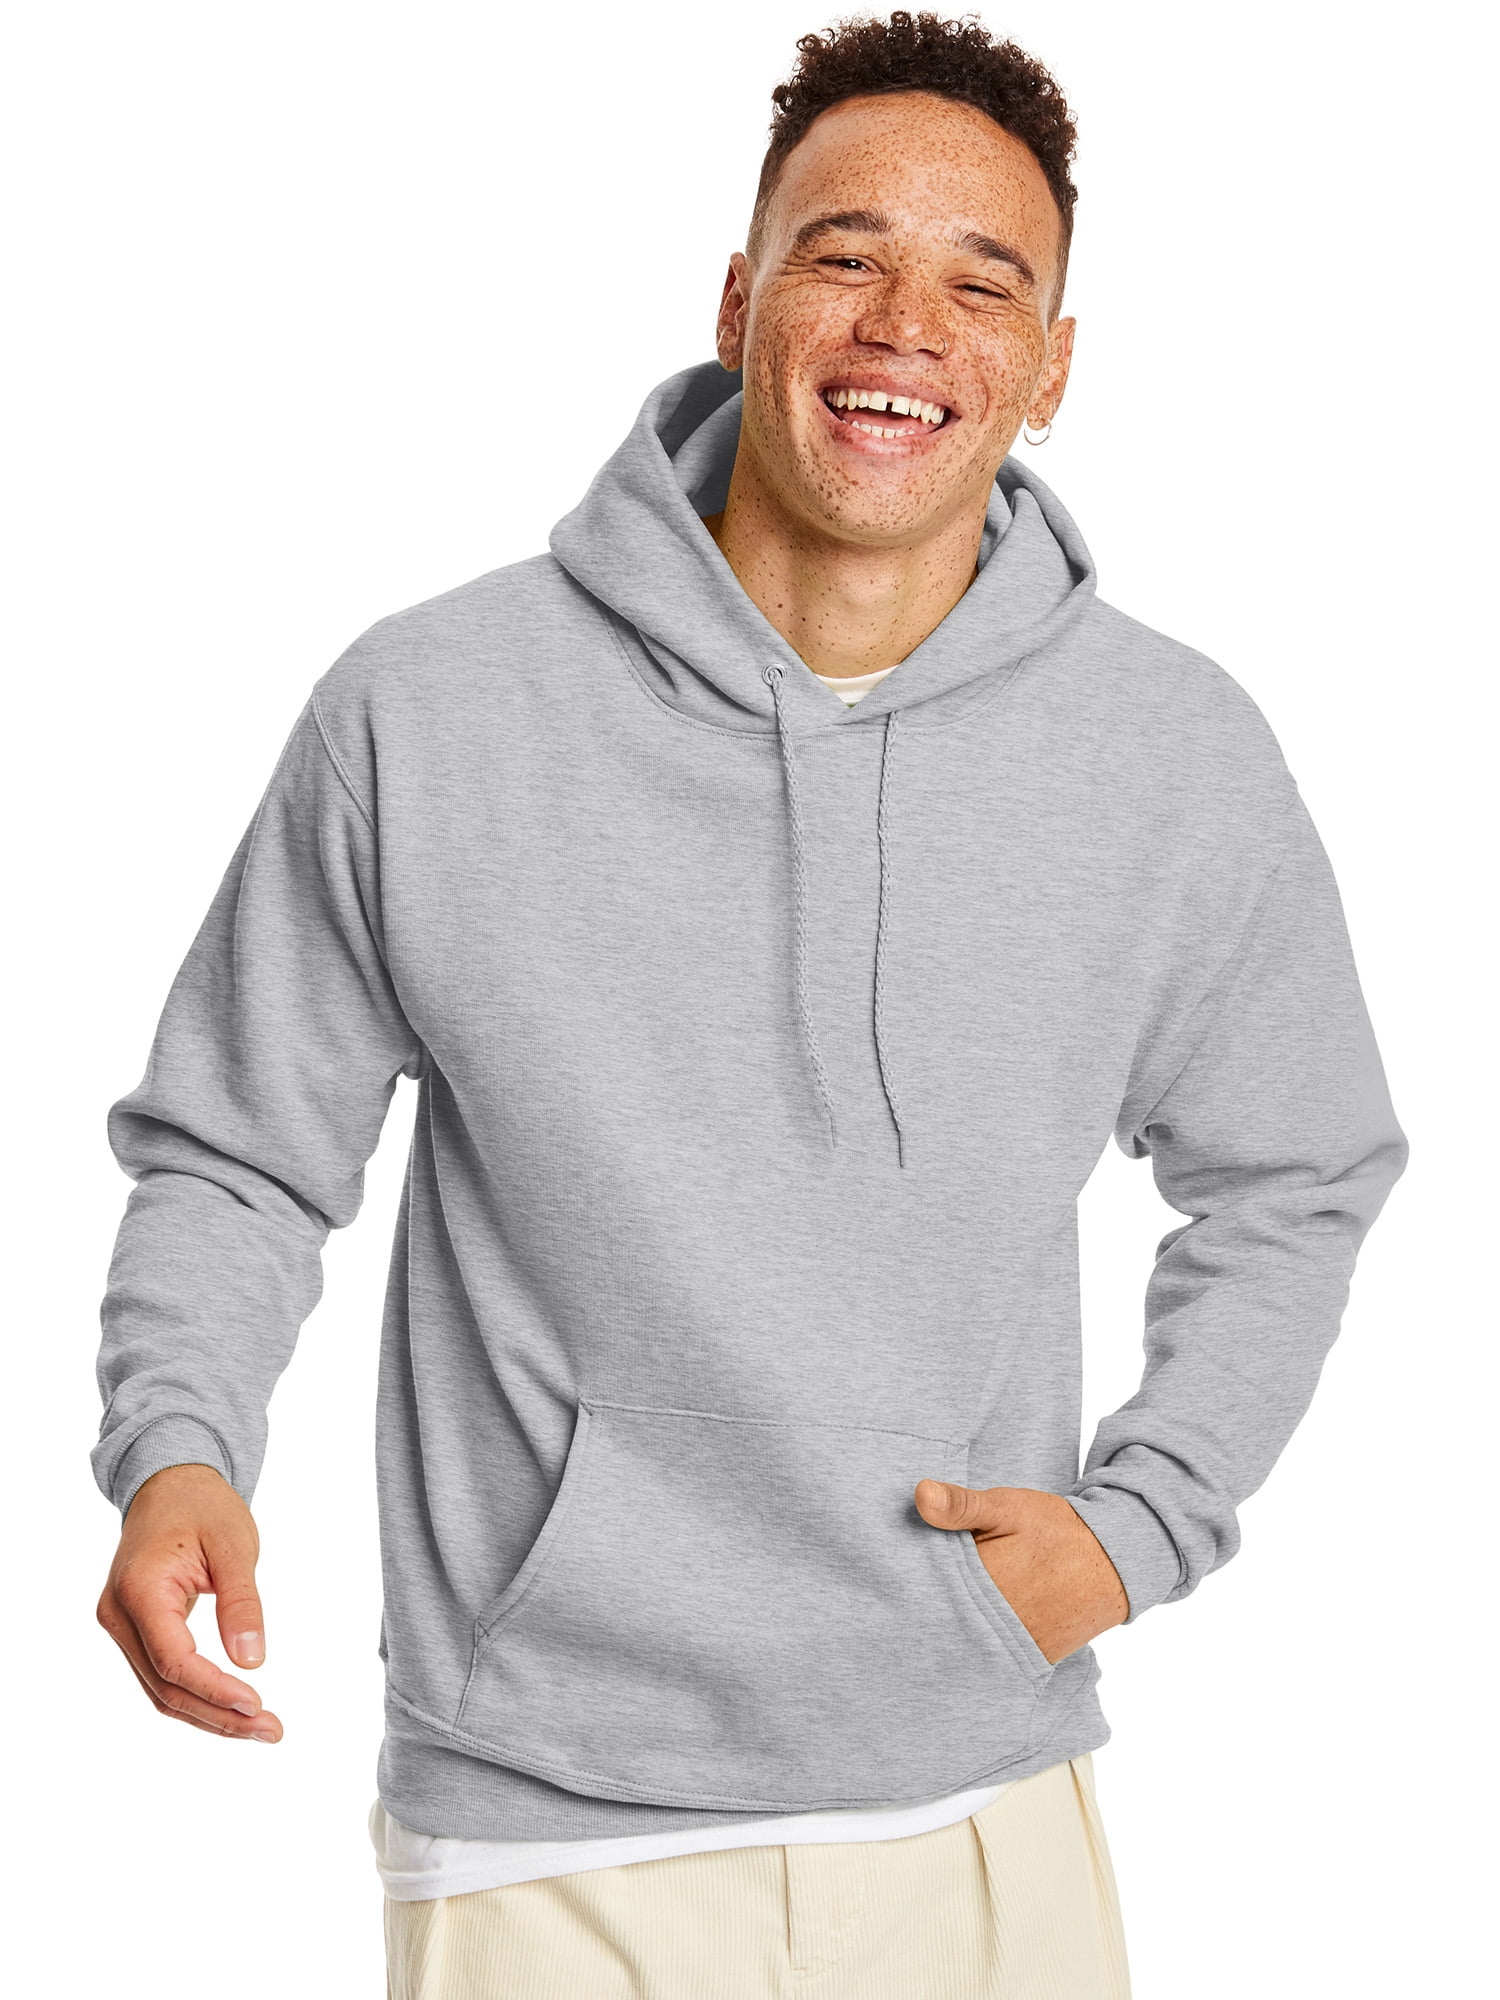 24 Hanes EcoSmart Hooded Sweatshirt Bulk Wholesale Hoodie ok to mix S-XL  Colors